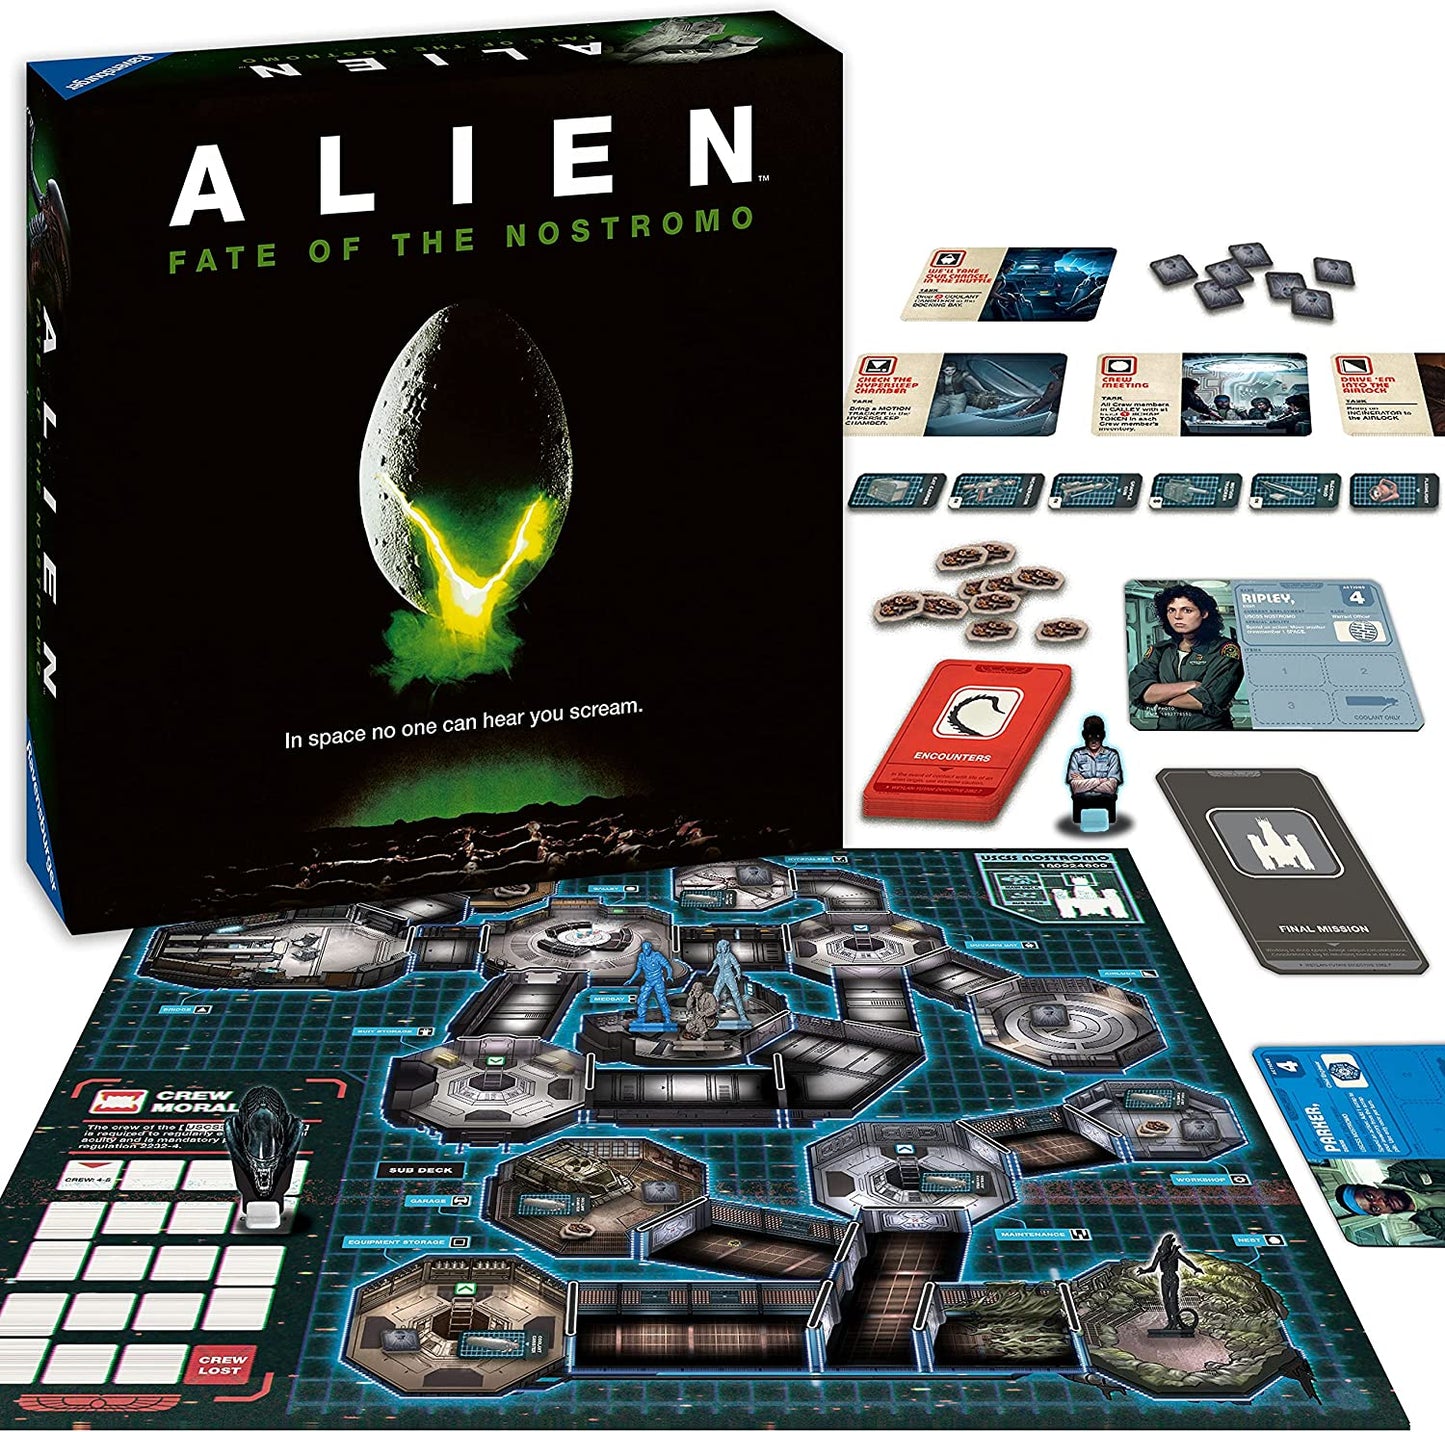 Alien: Fate of the Nostromo contents